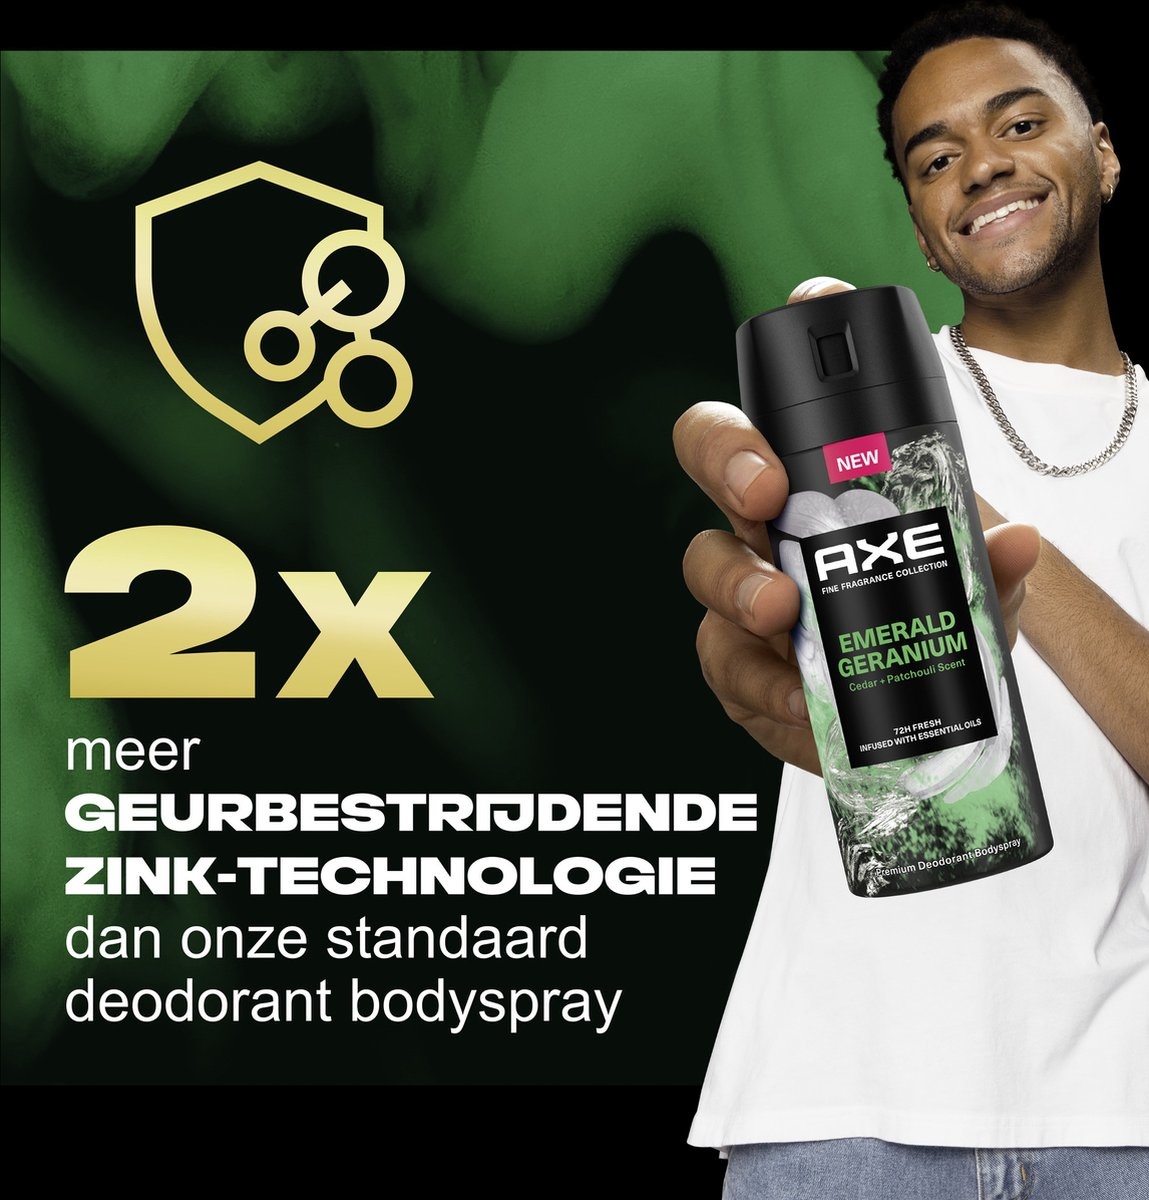 AXE Fine Fragrance Collection Emerald Geranium Premium Deodorant Bodyspray 150 ml